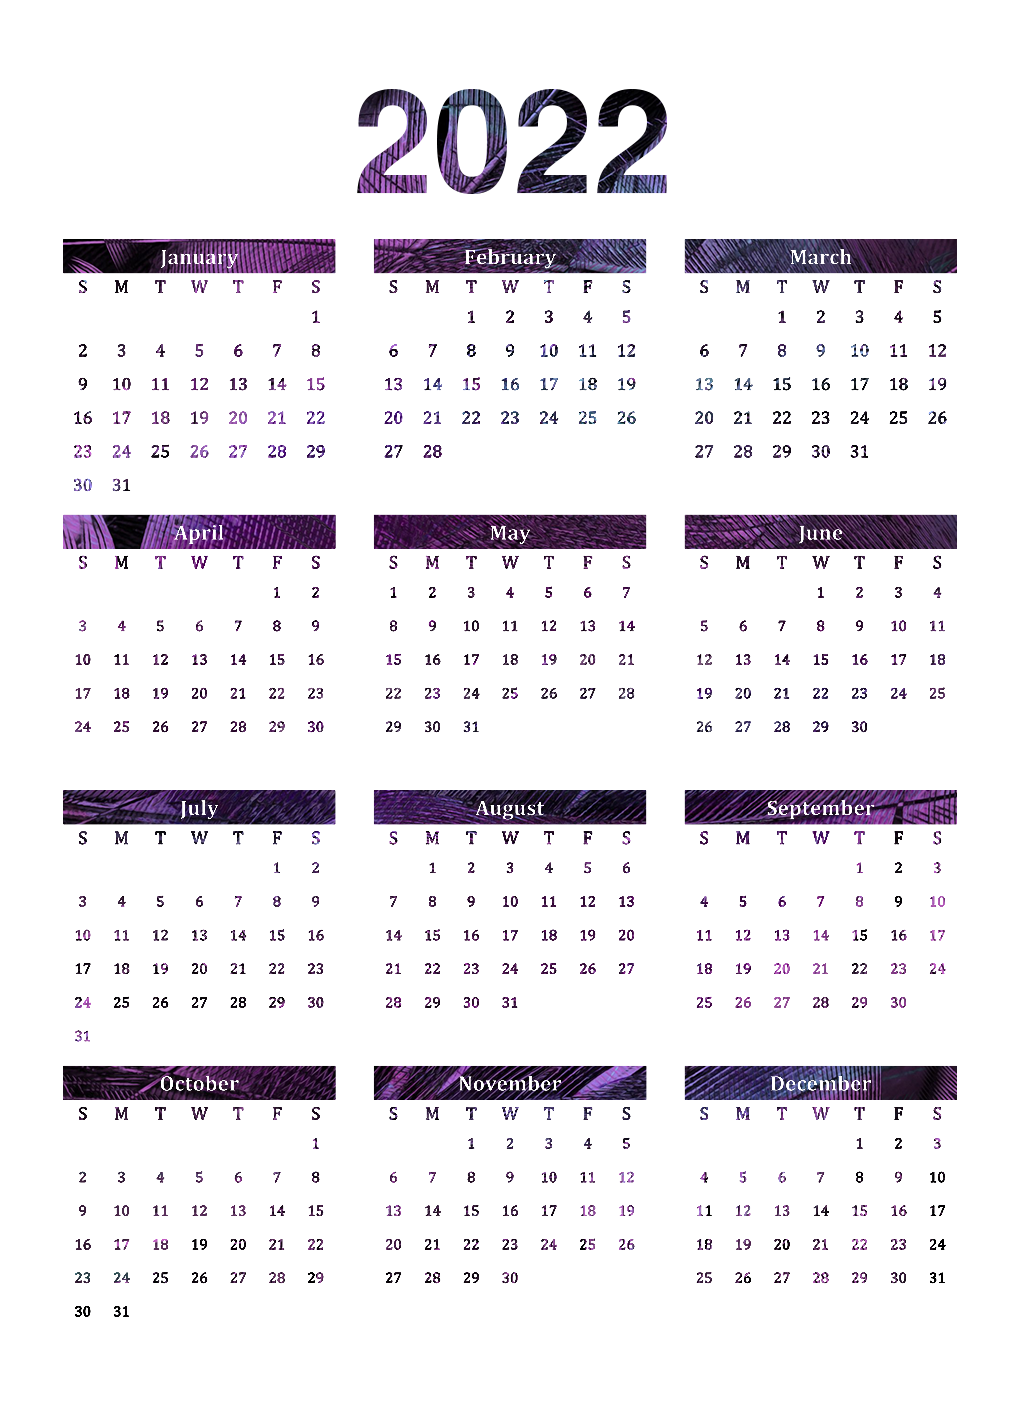 Vector Calendario 2022 imagen PNGn de alta calidad